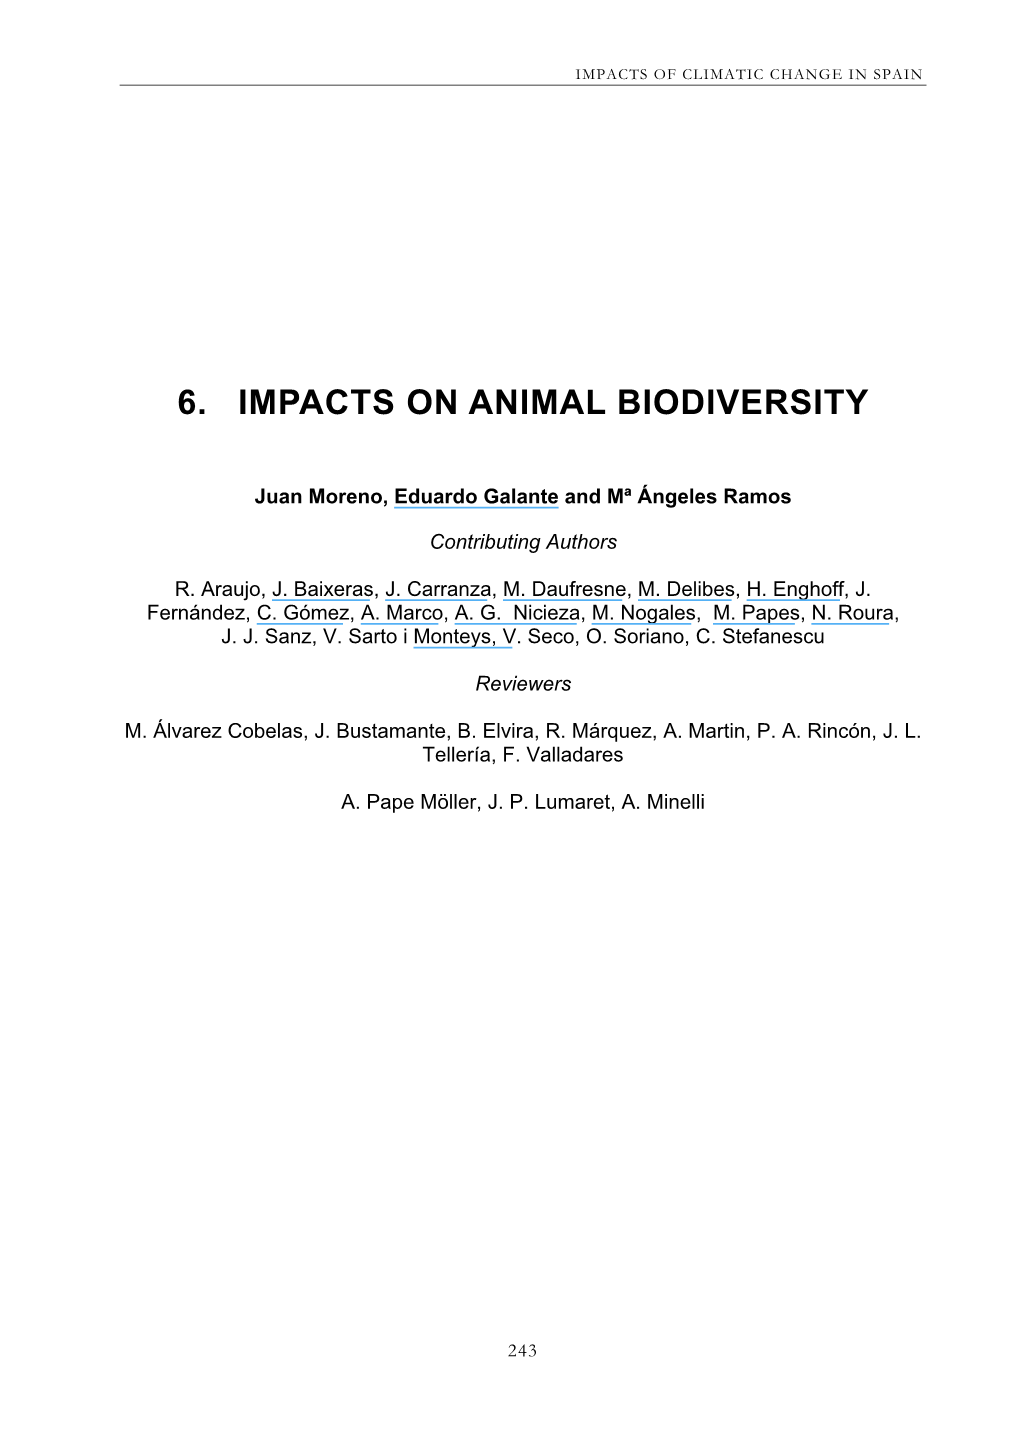 6. Impacts on Animal Biodiversity